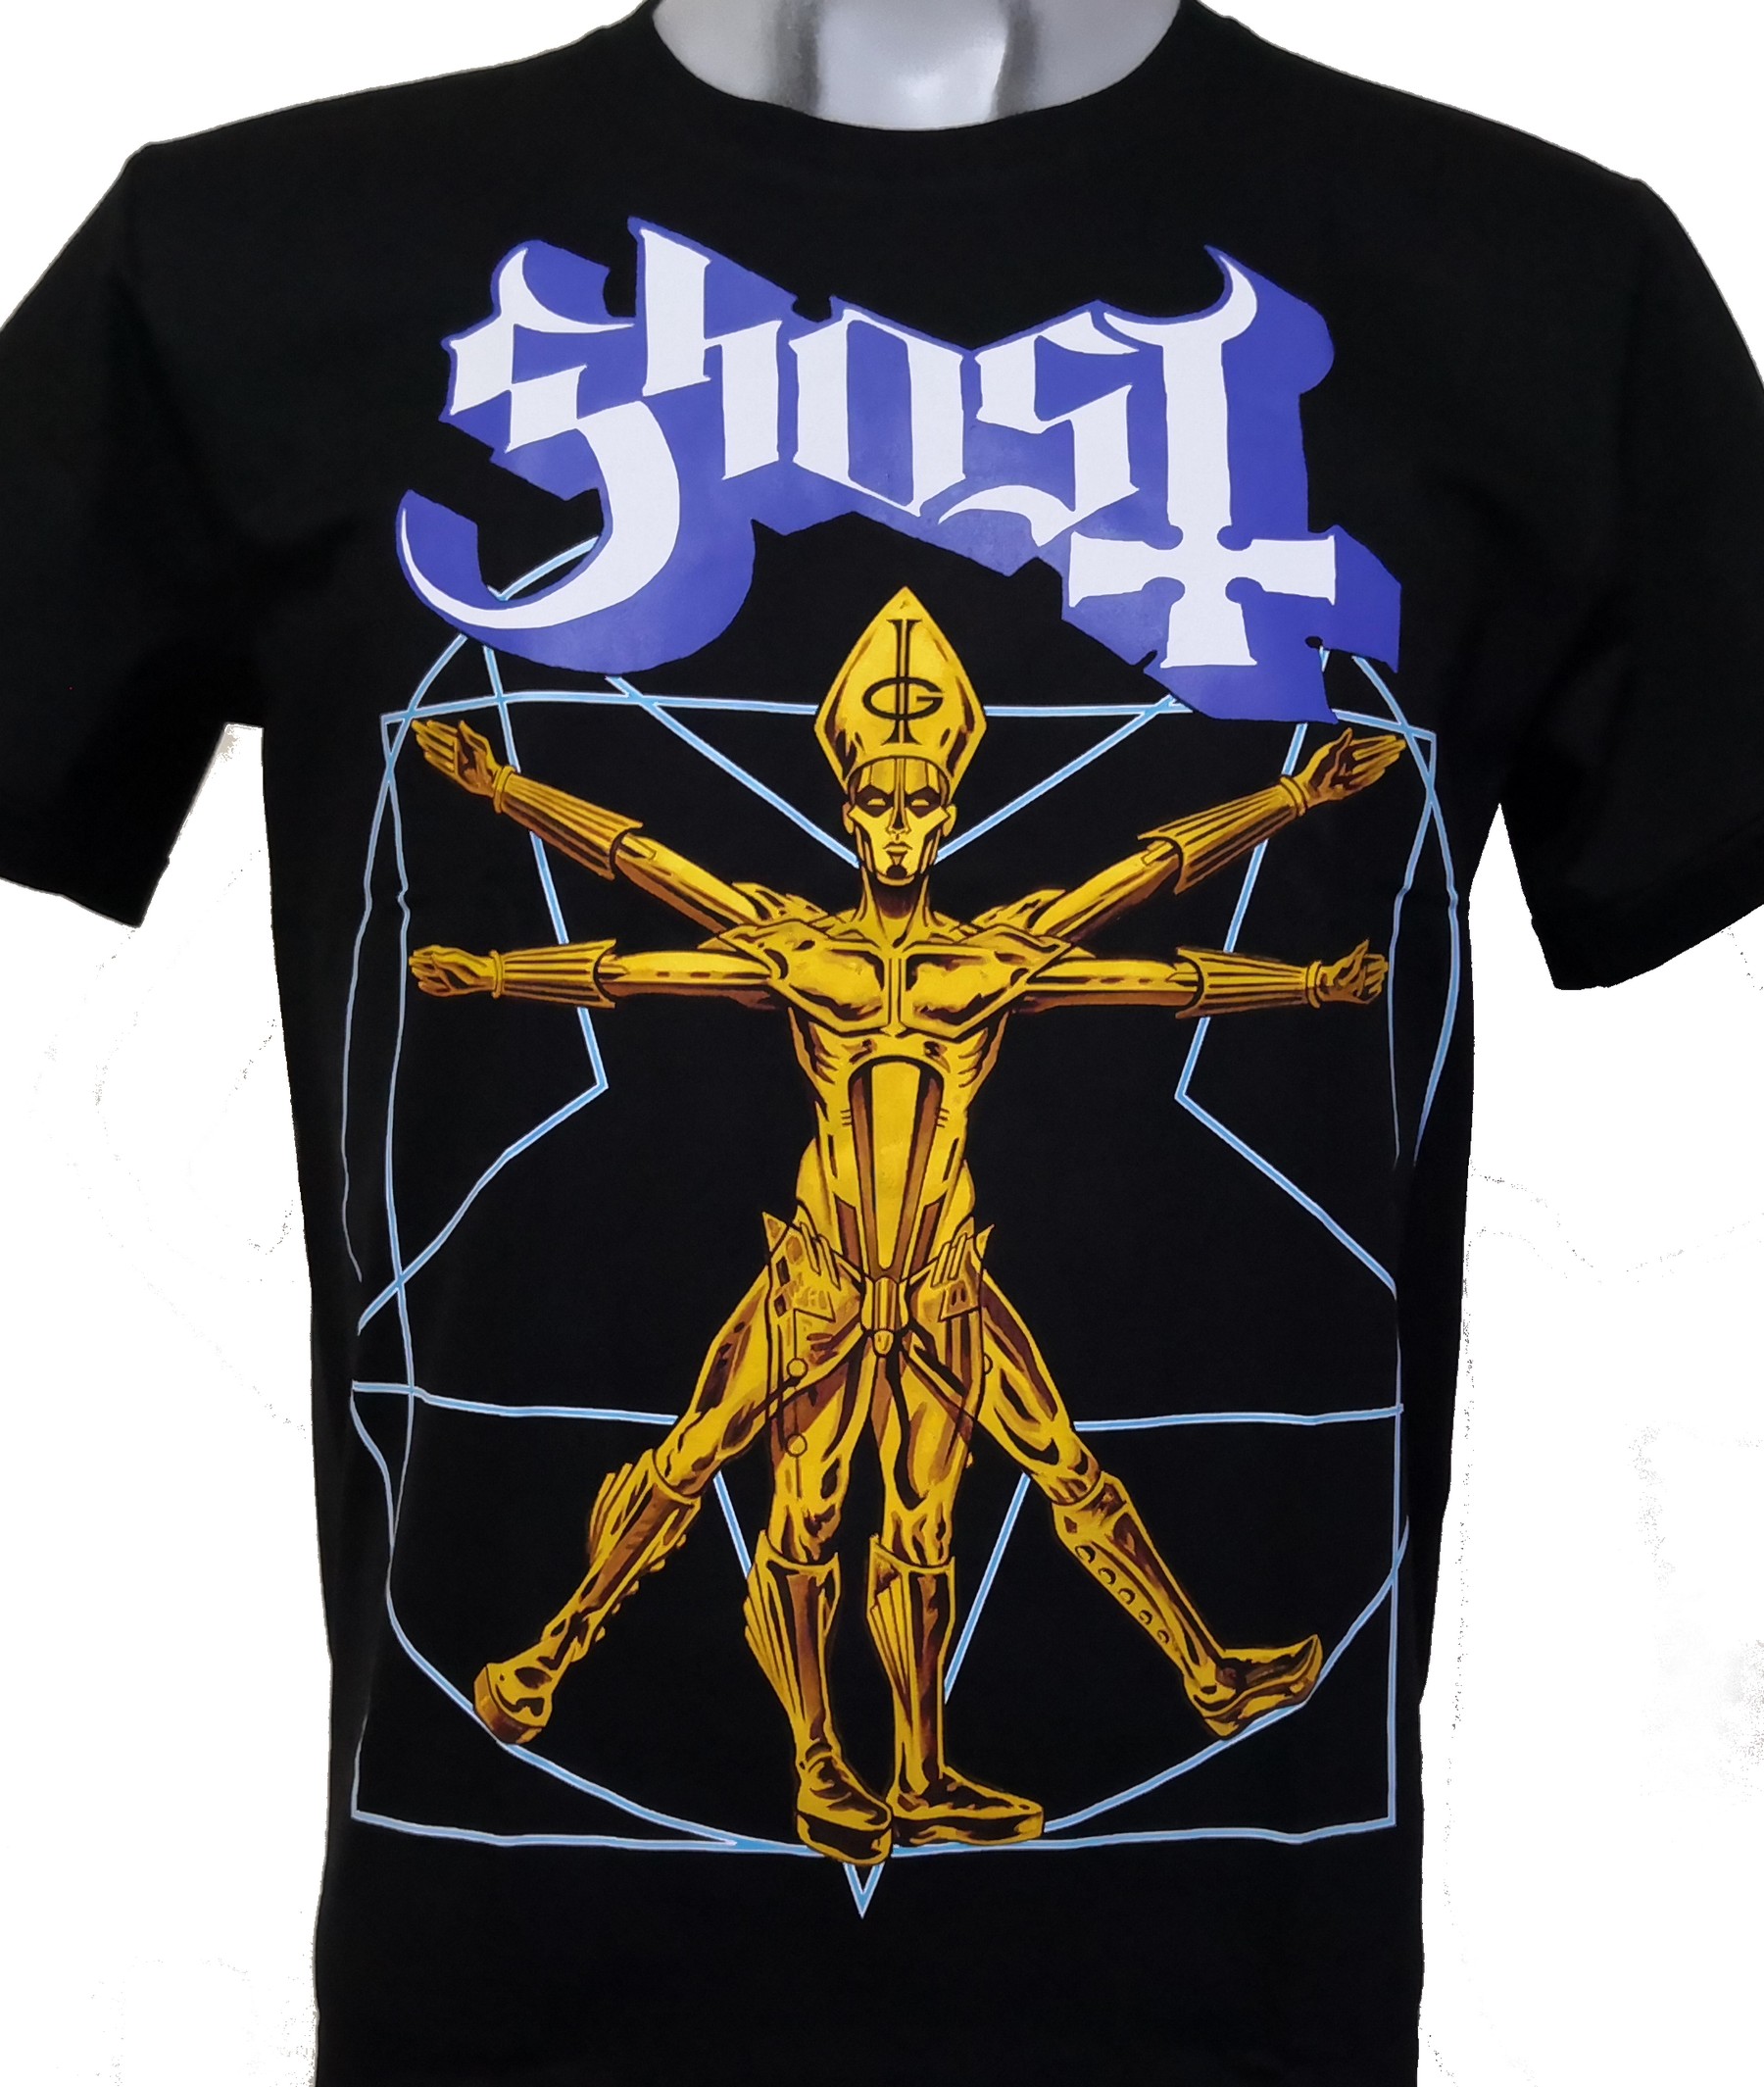 Ghost t-shirt size S – RoxxBKK